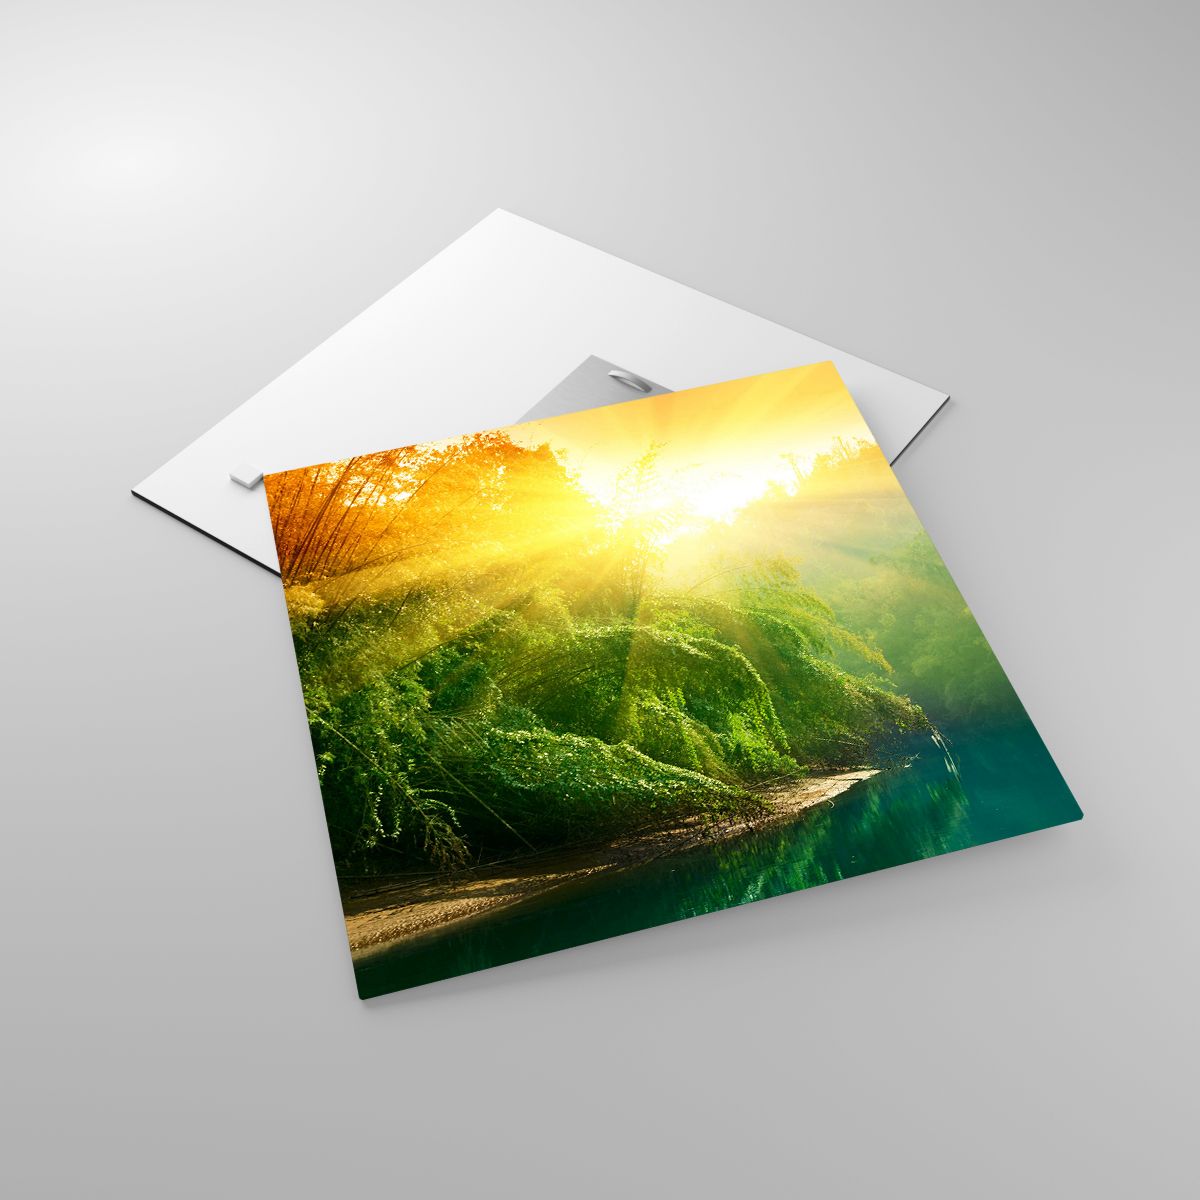 Glasbild Tropen, Glasbild Landschaft, Glasbild Sonne, Glasbild Landschaft, Glasbild Natur